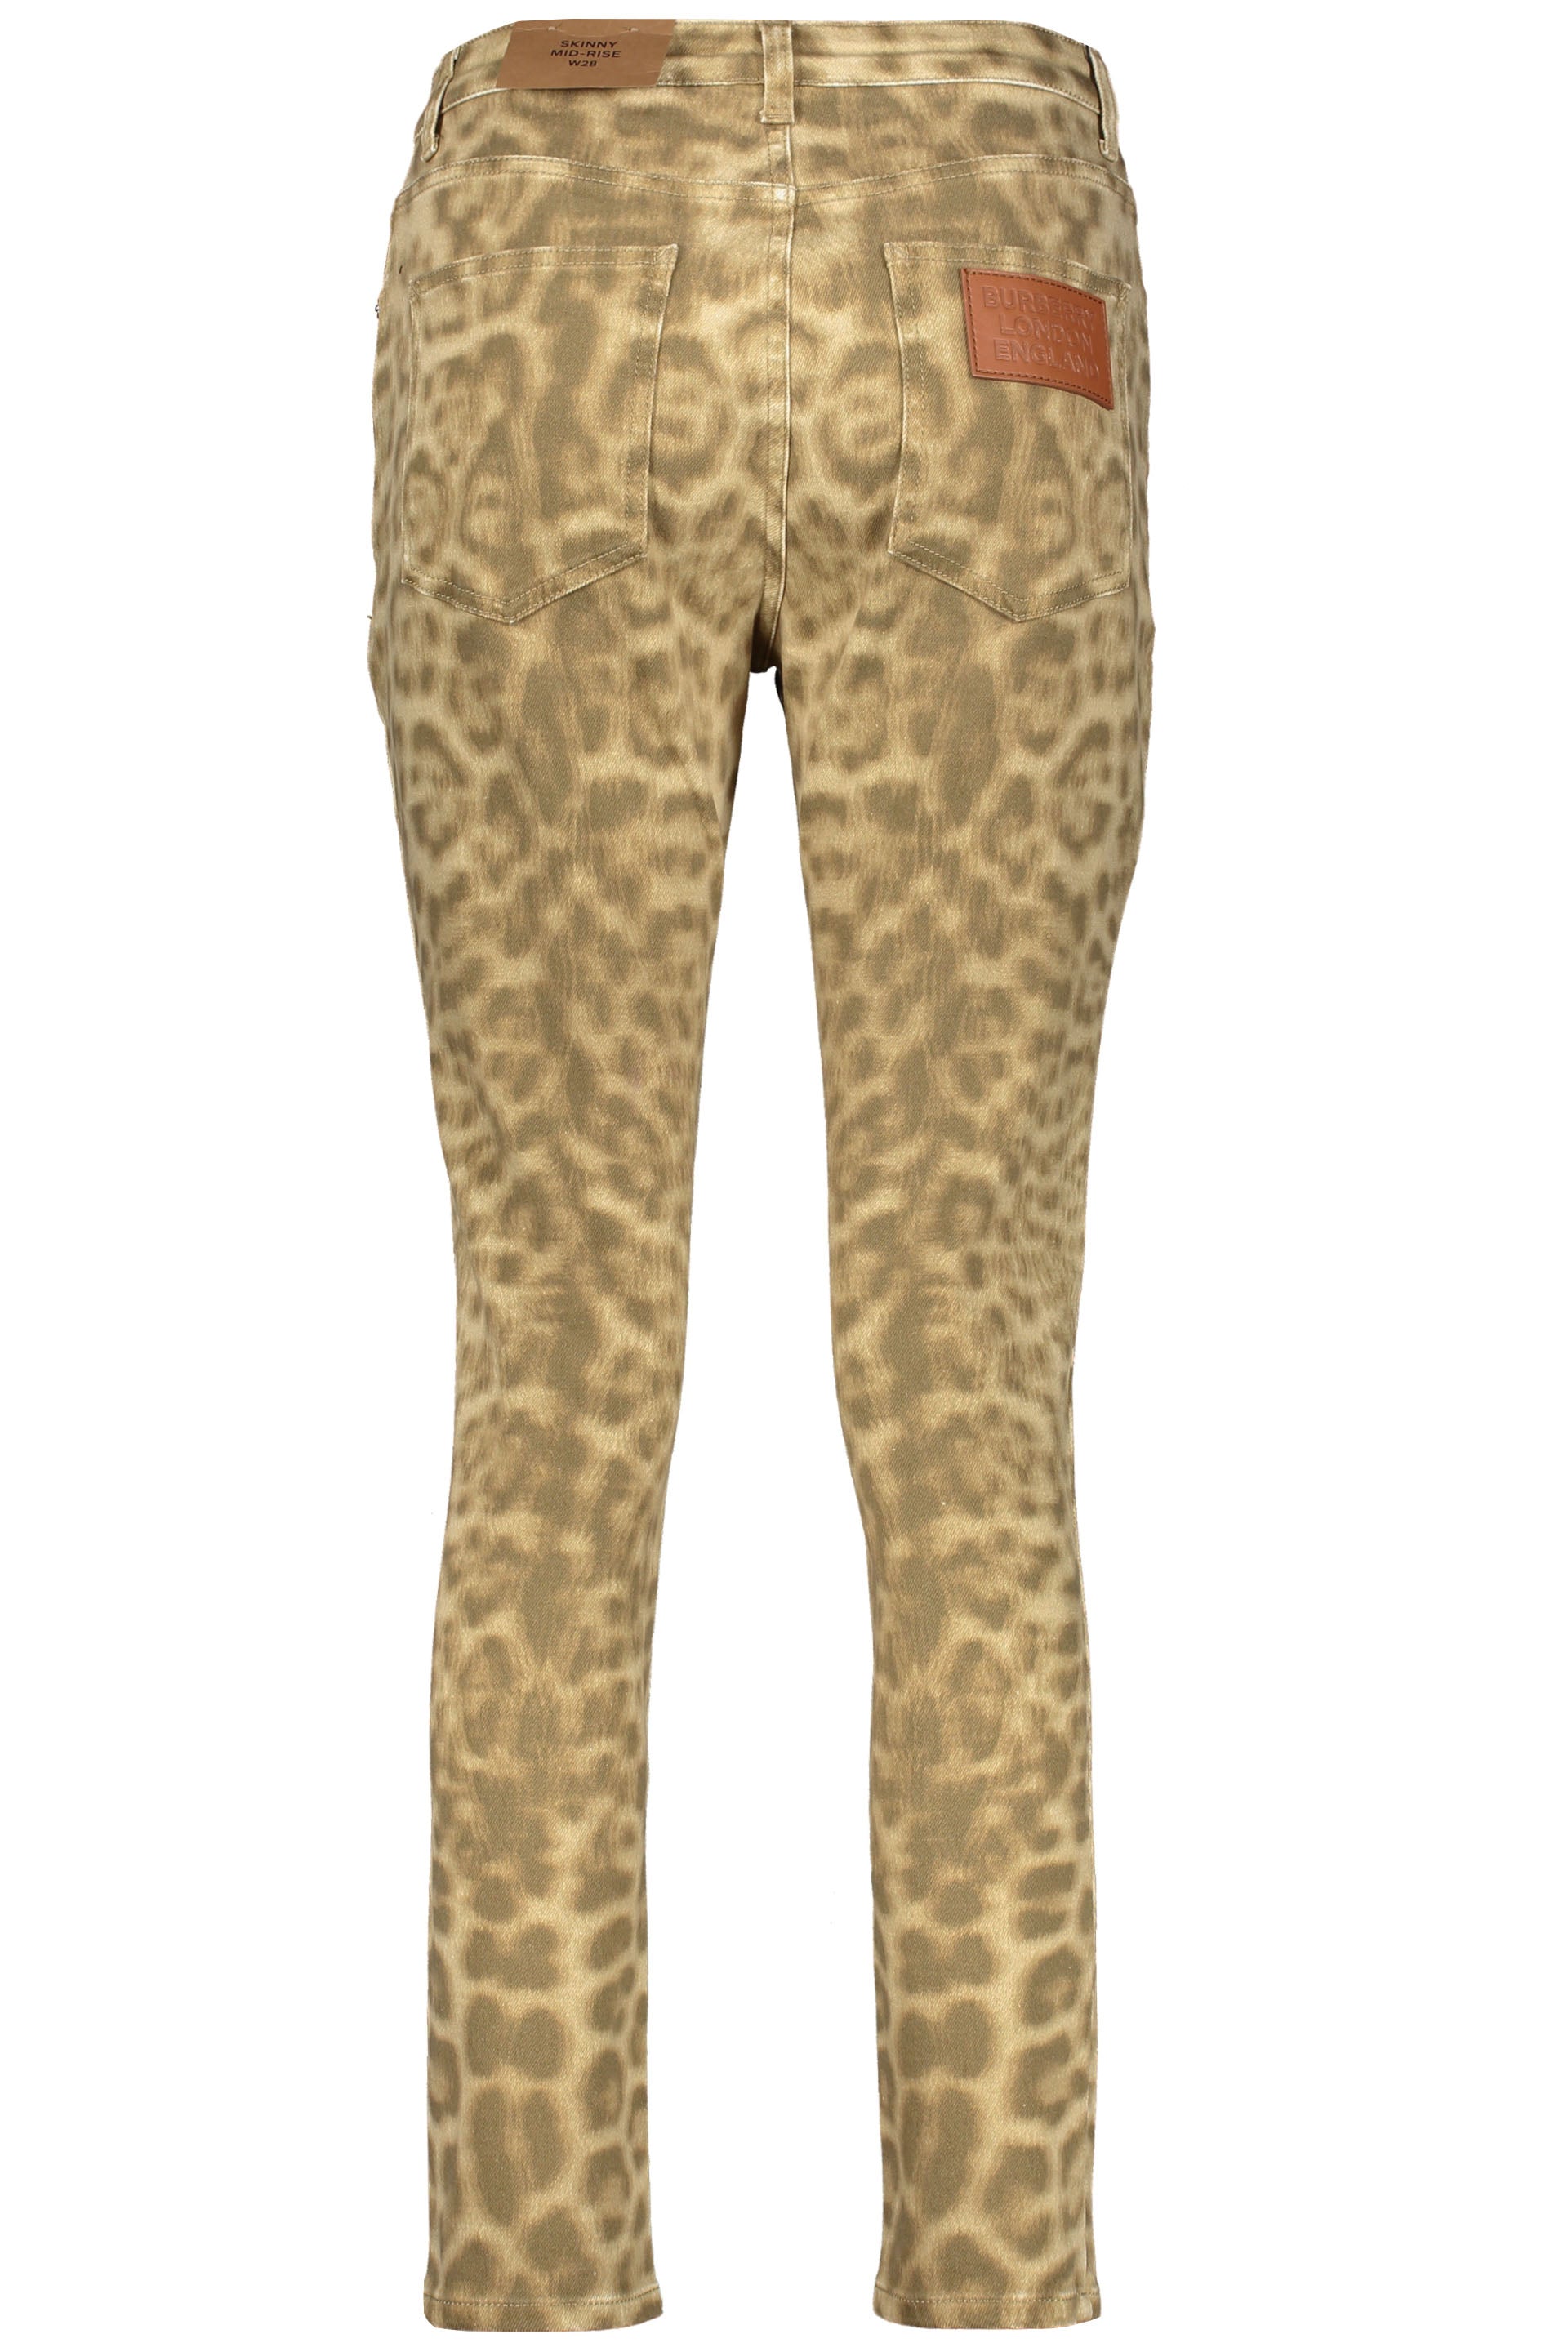 Leopard print skinny jeans-Burberry-OUTLET-SALE-ARCHIVIST